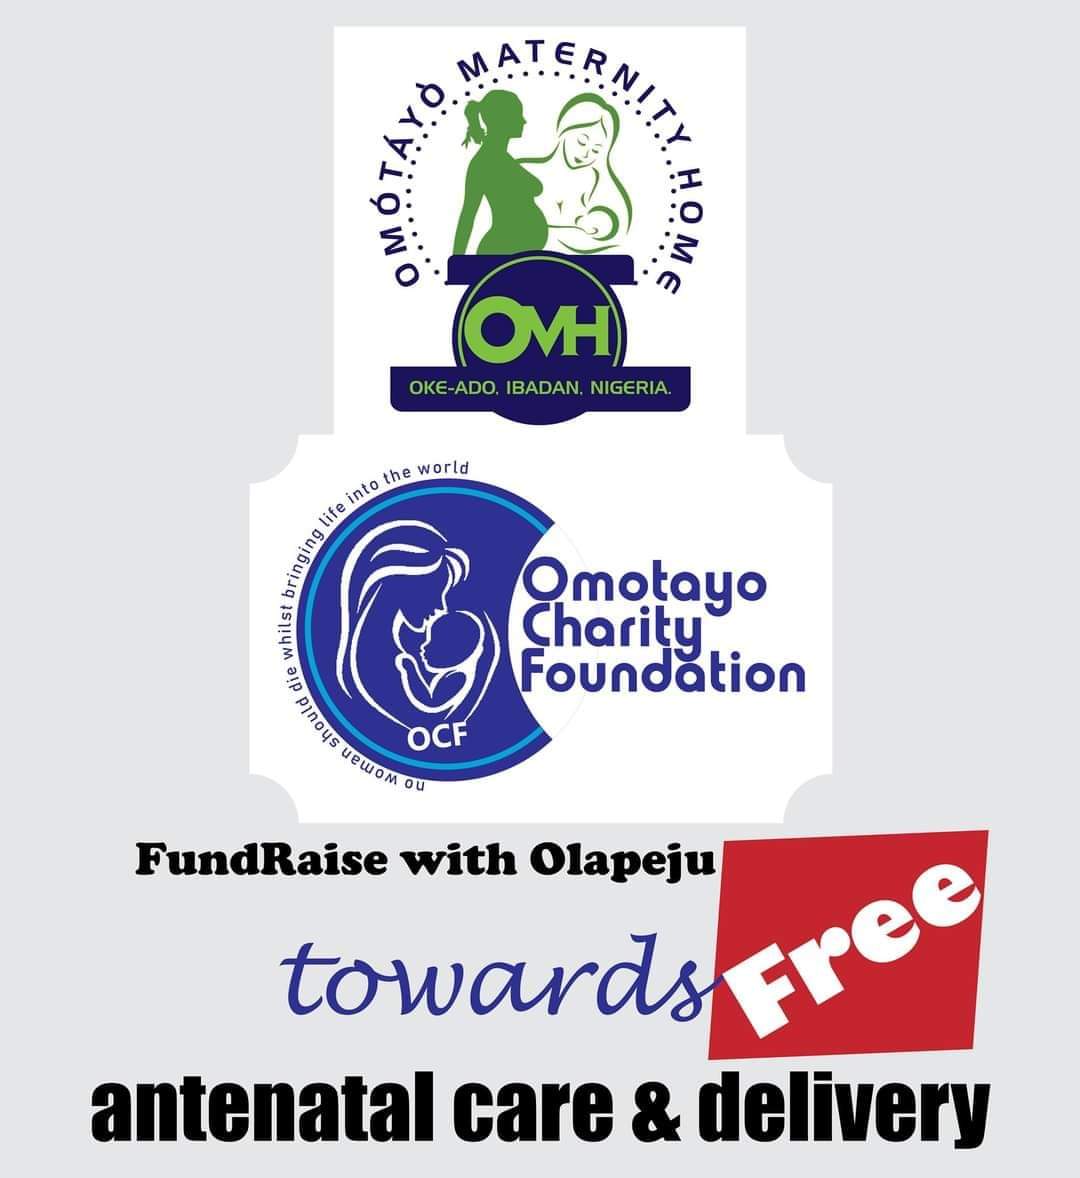 Omotayo Charity Foundation